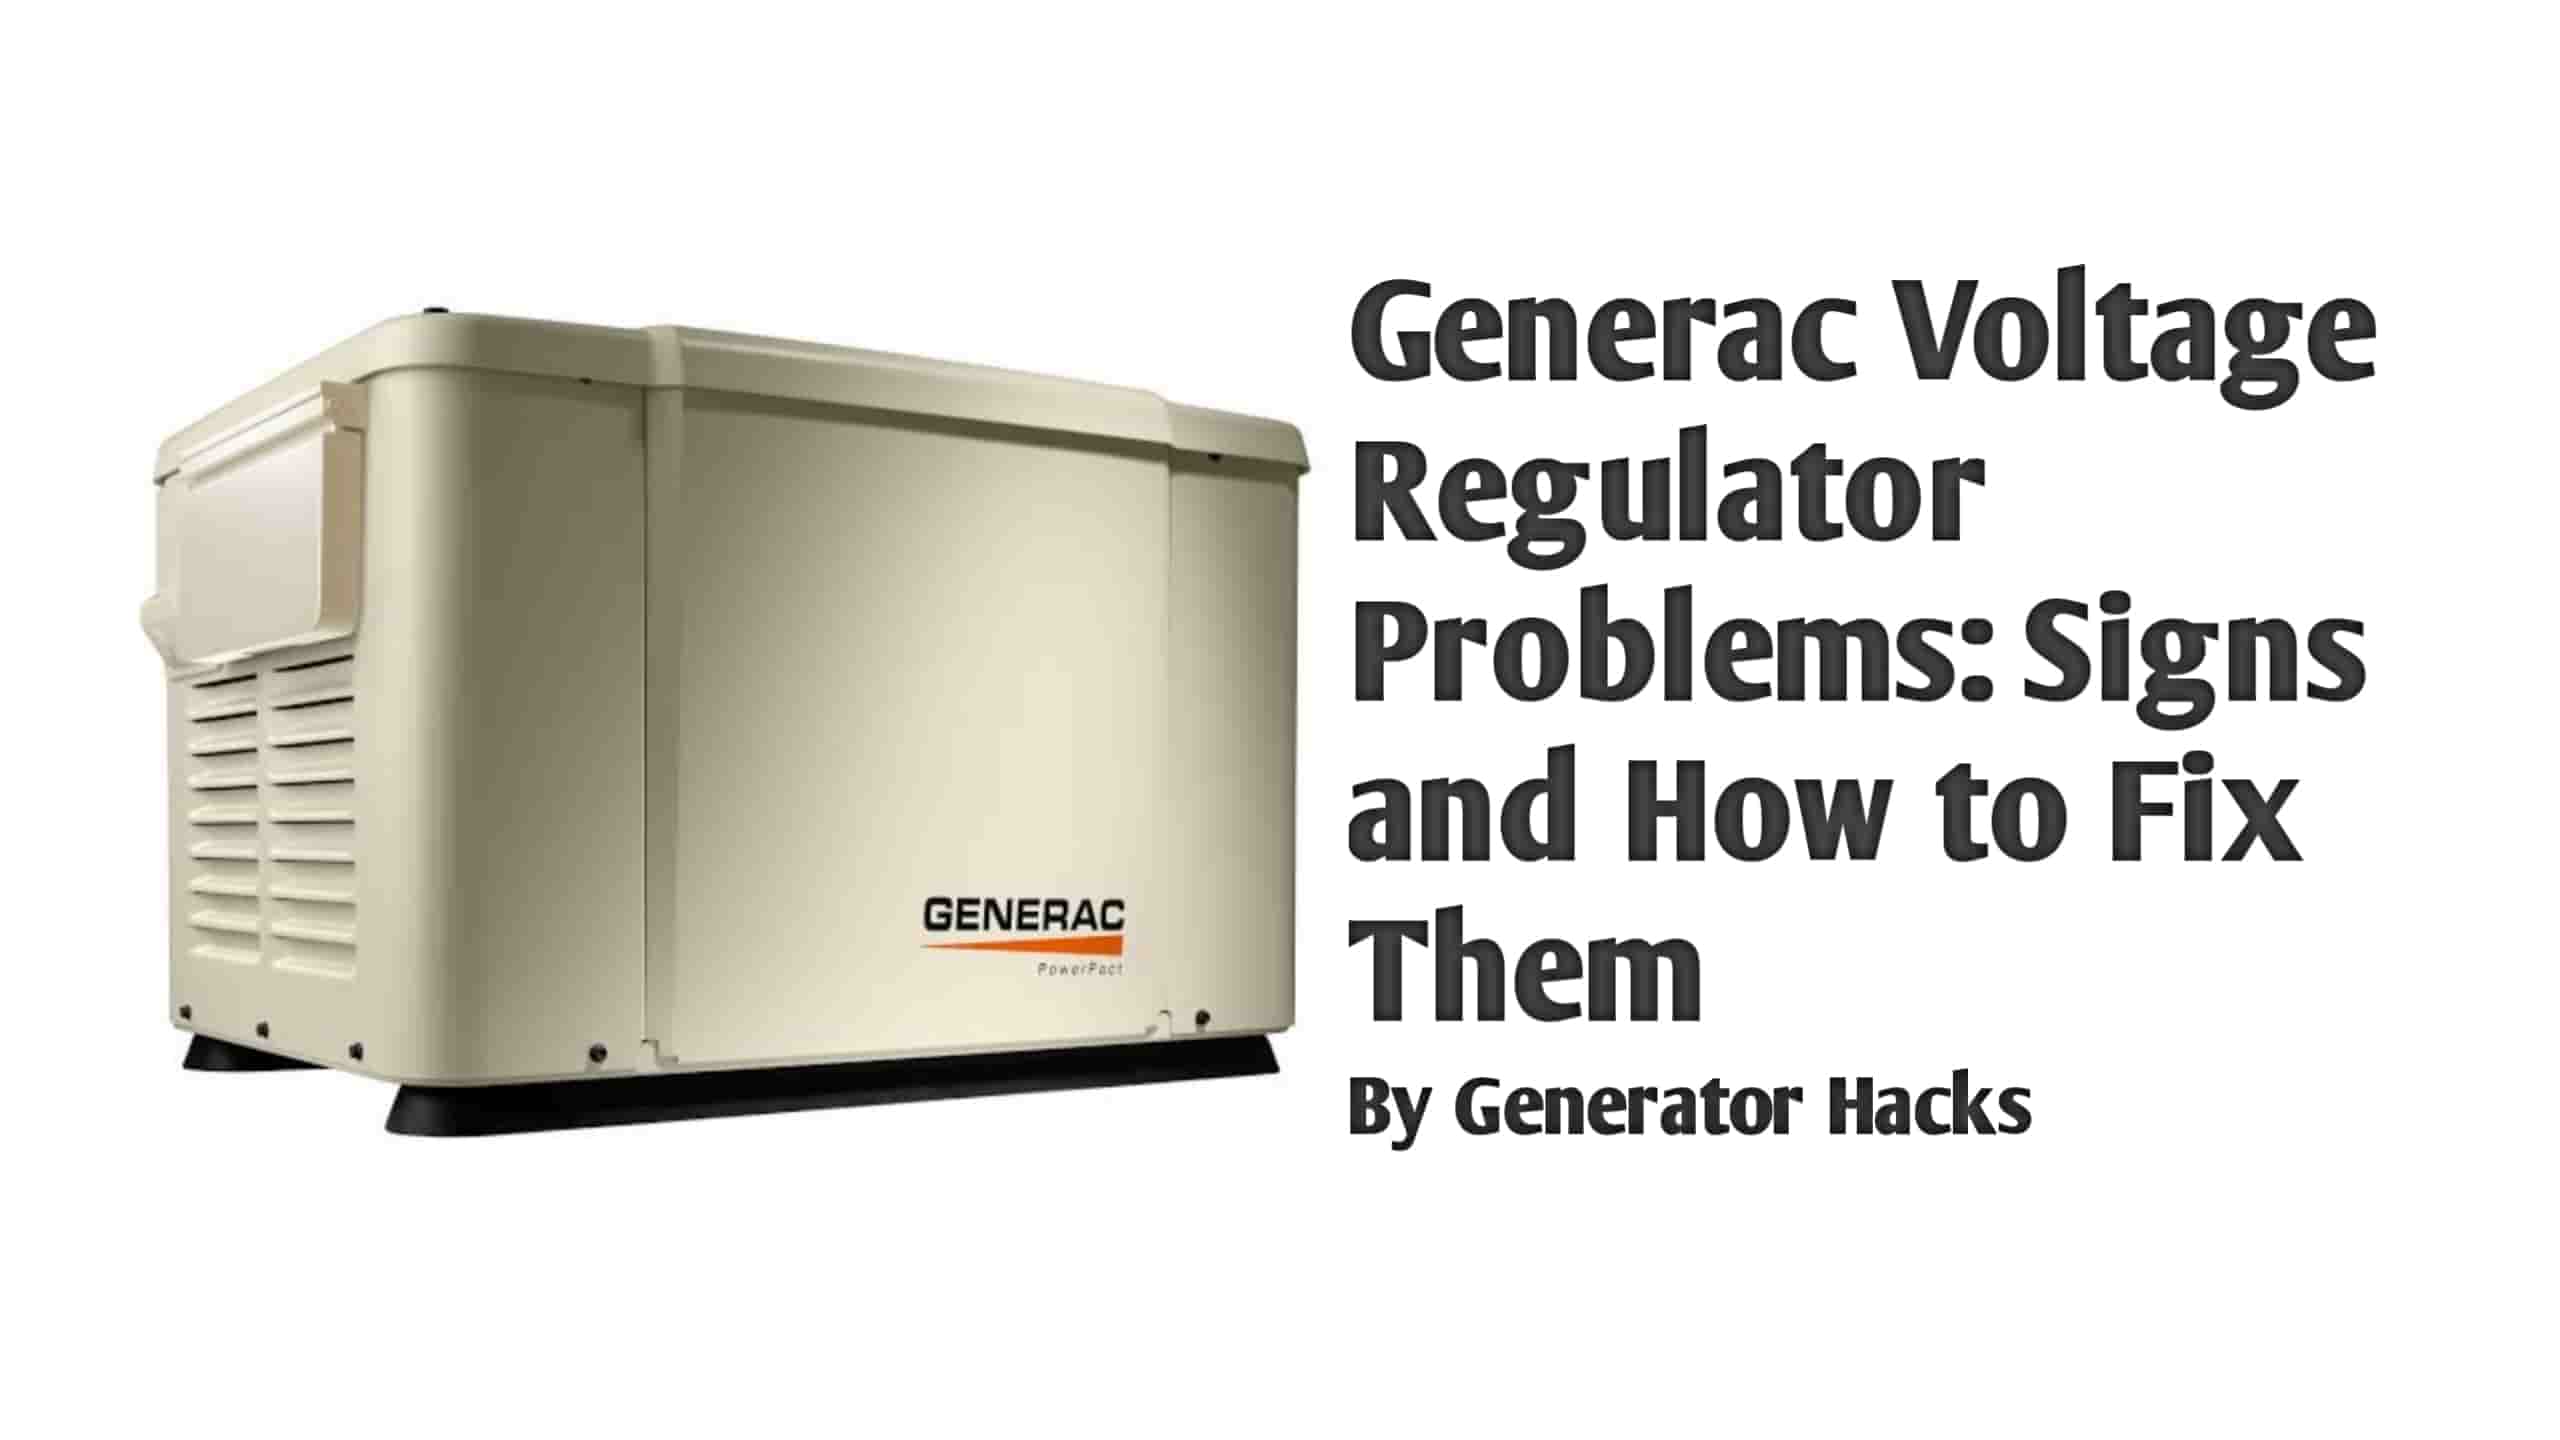 Generac Voltage Regulator Problems,